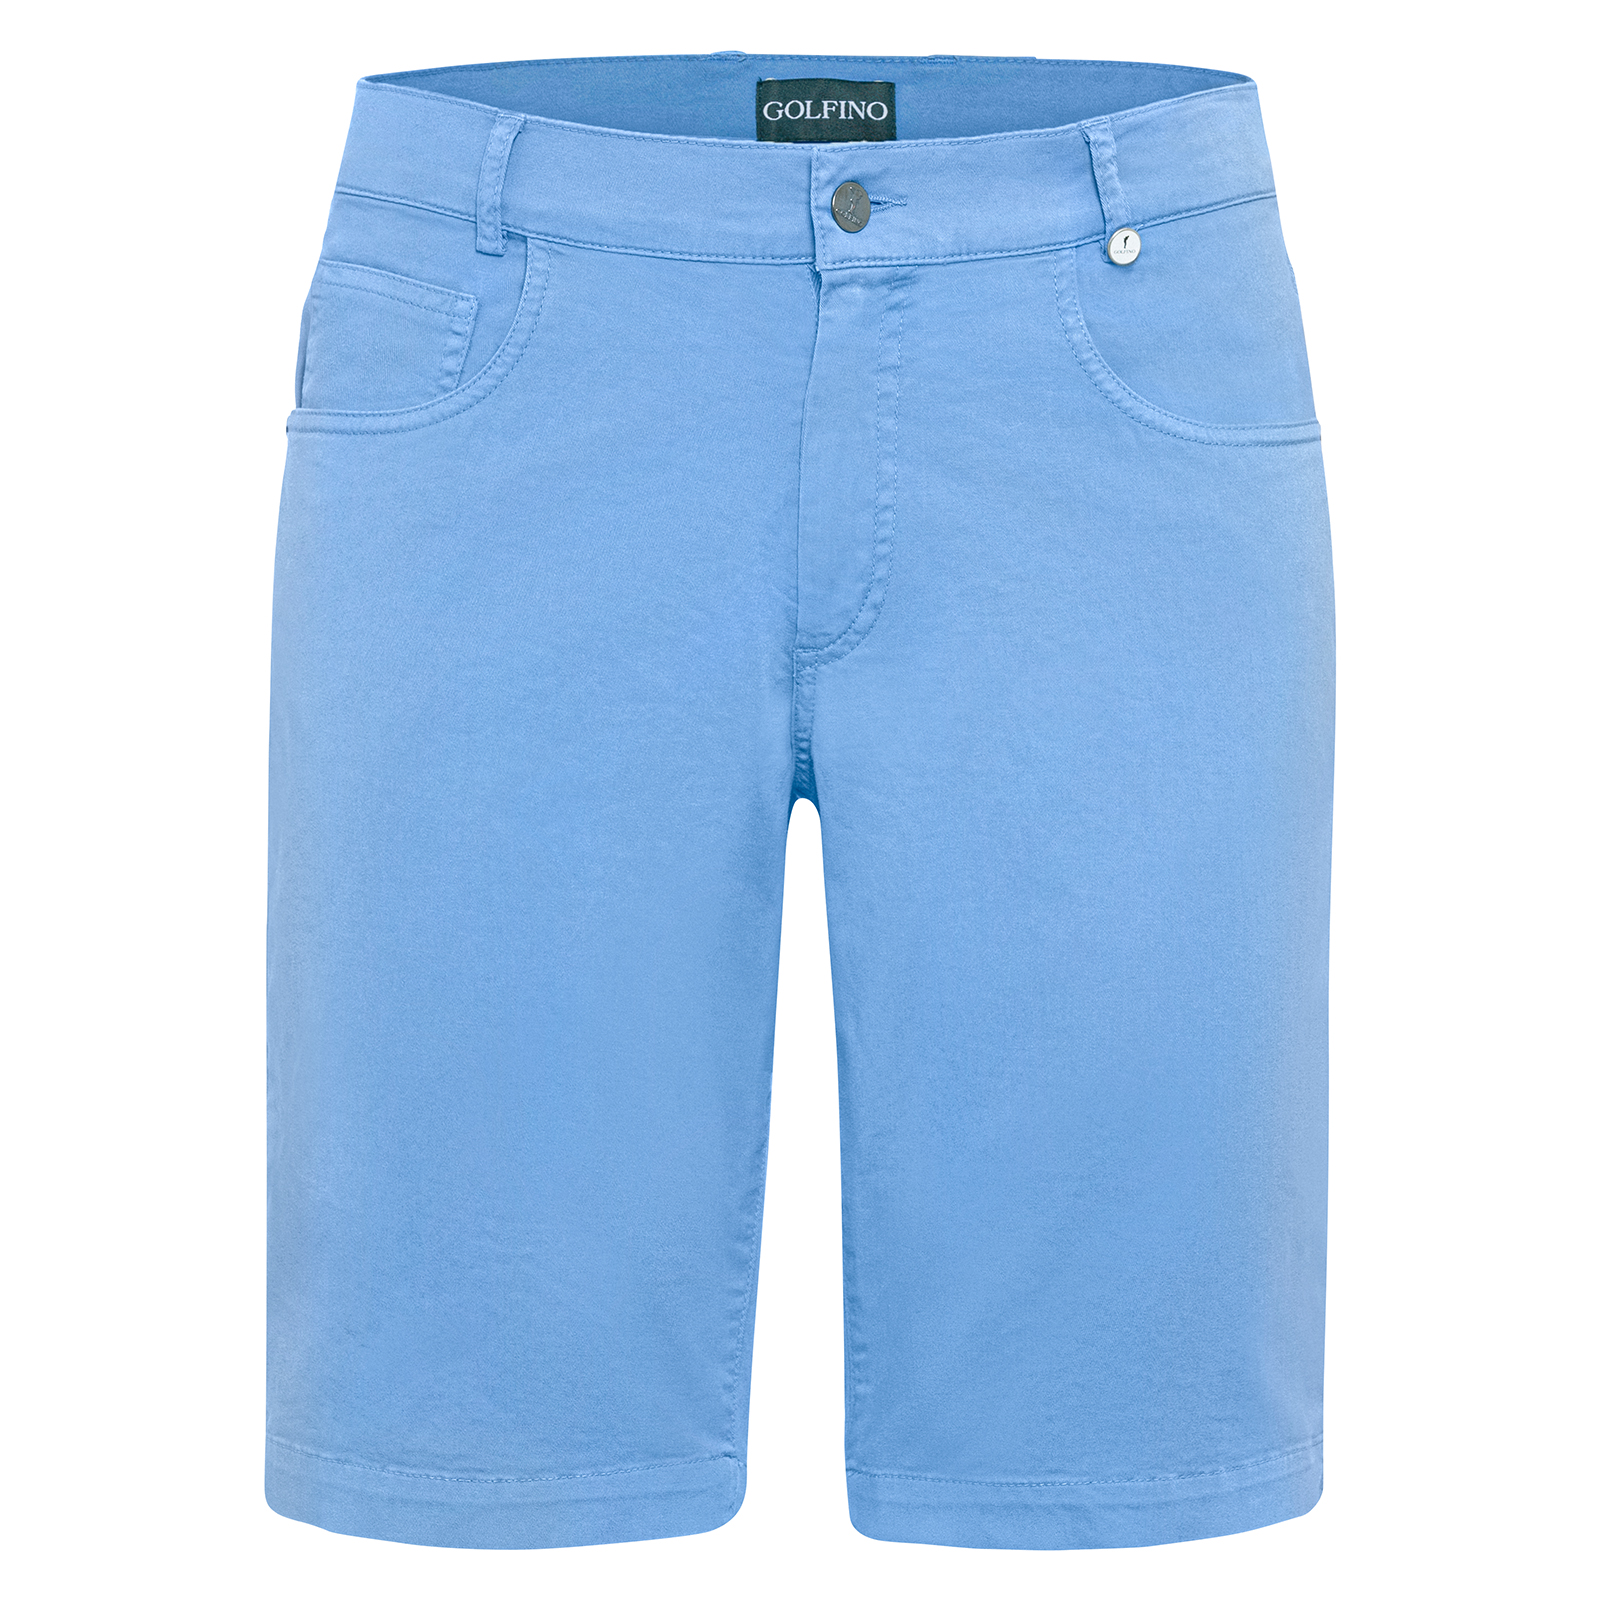 Men's Cotton Bermuda in practical 5-pocket style